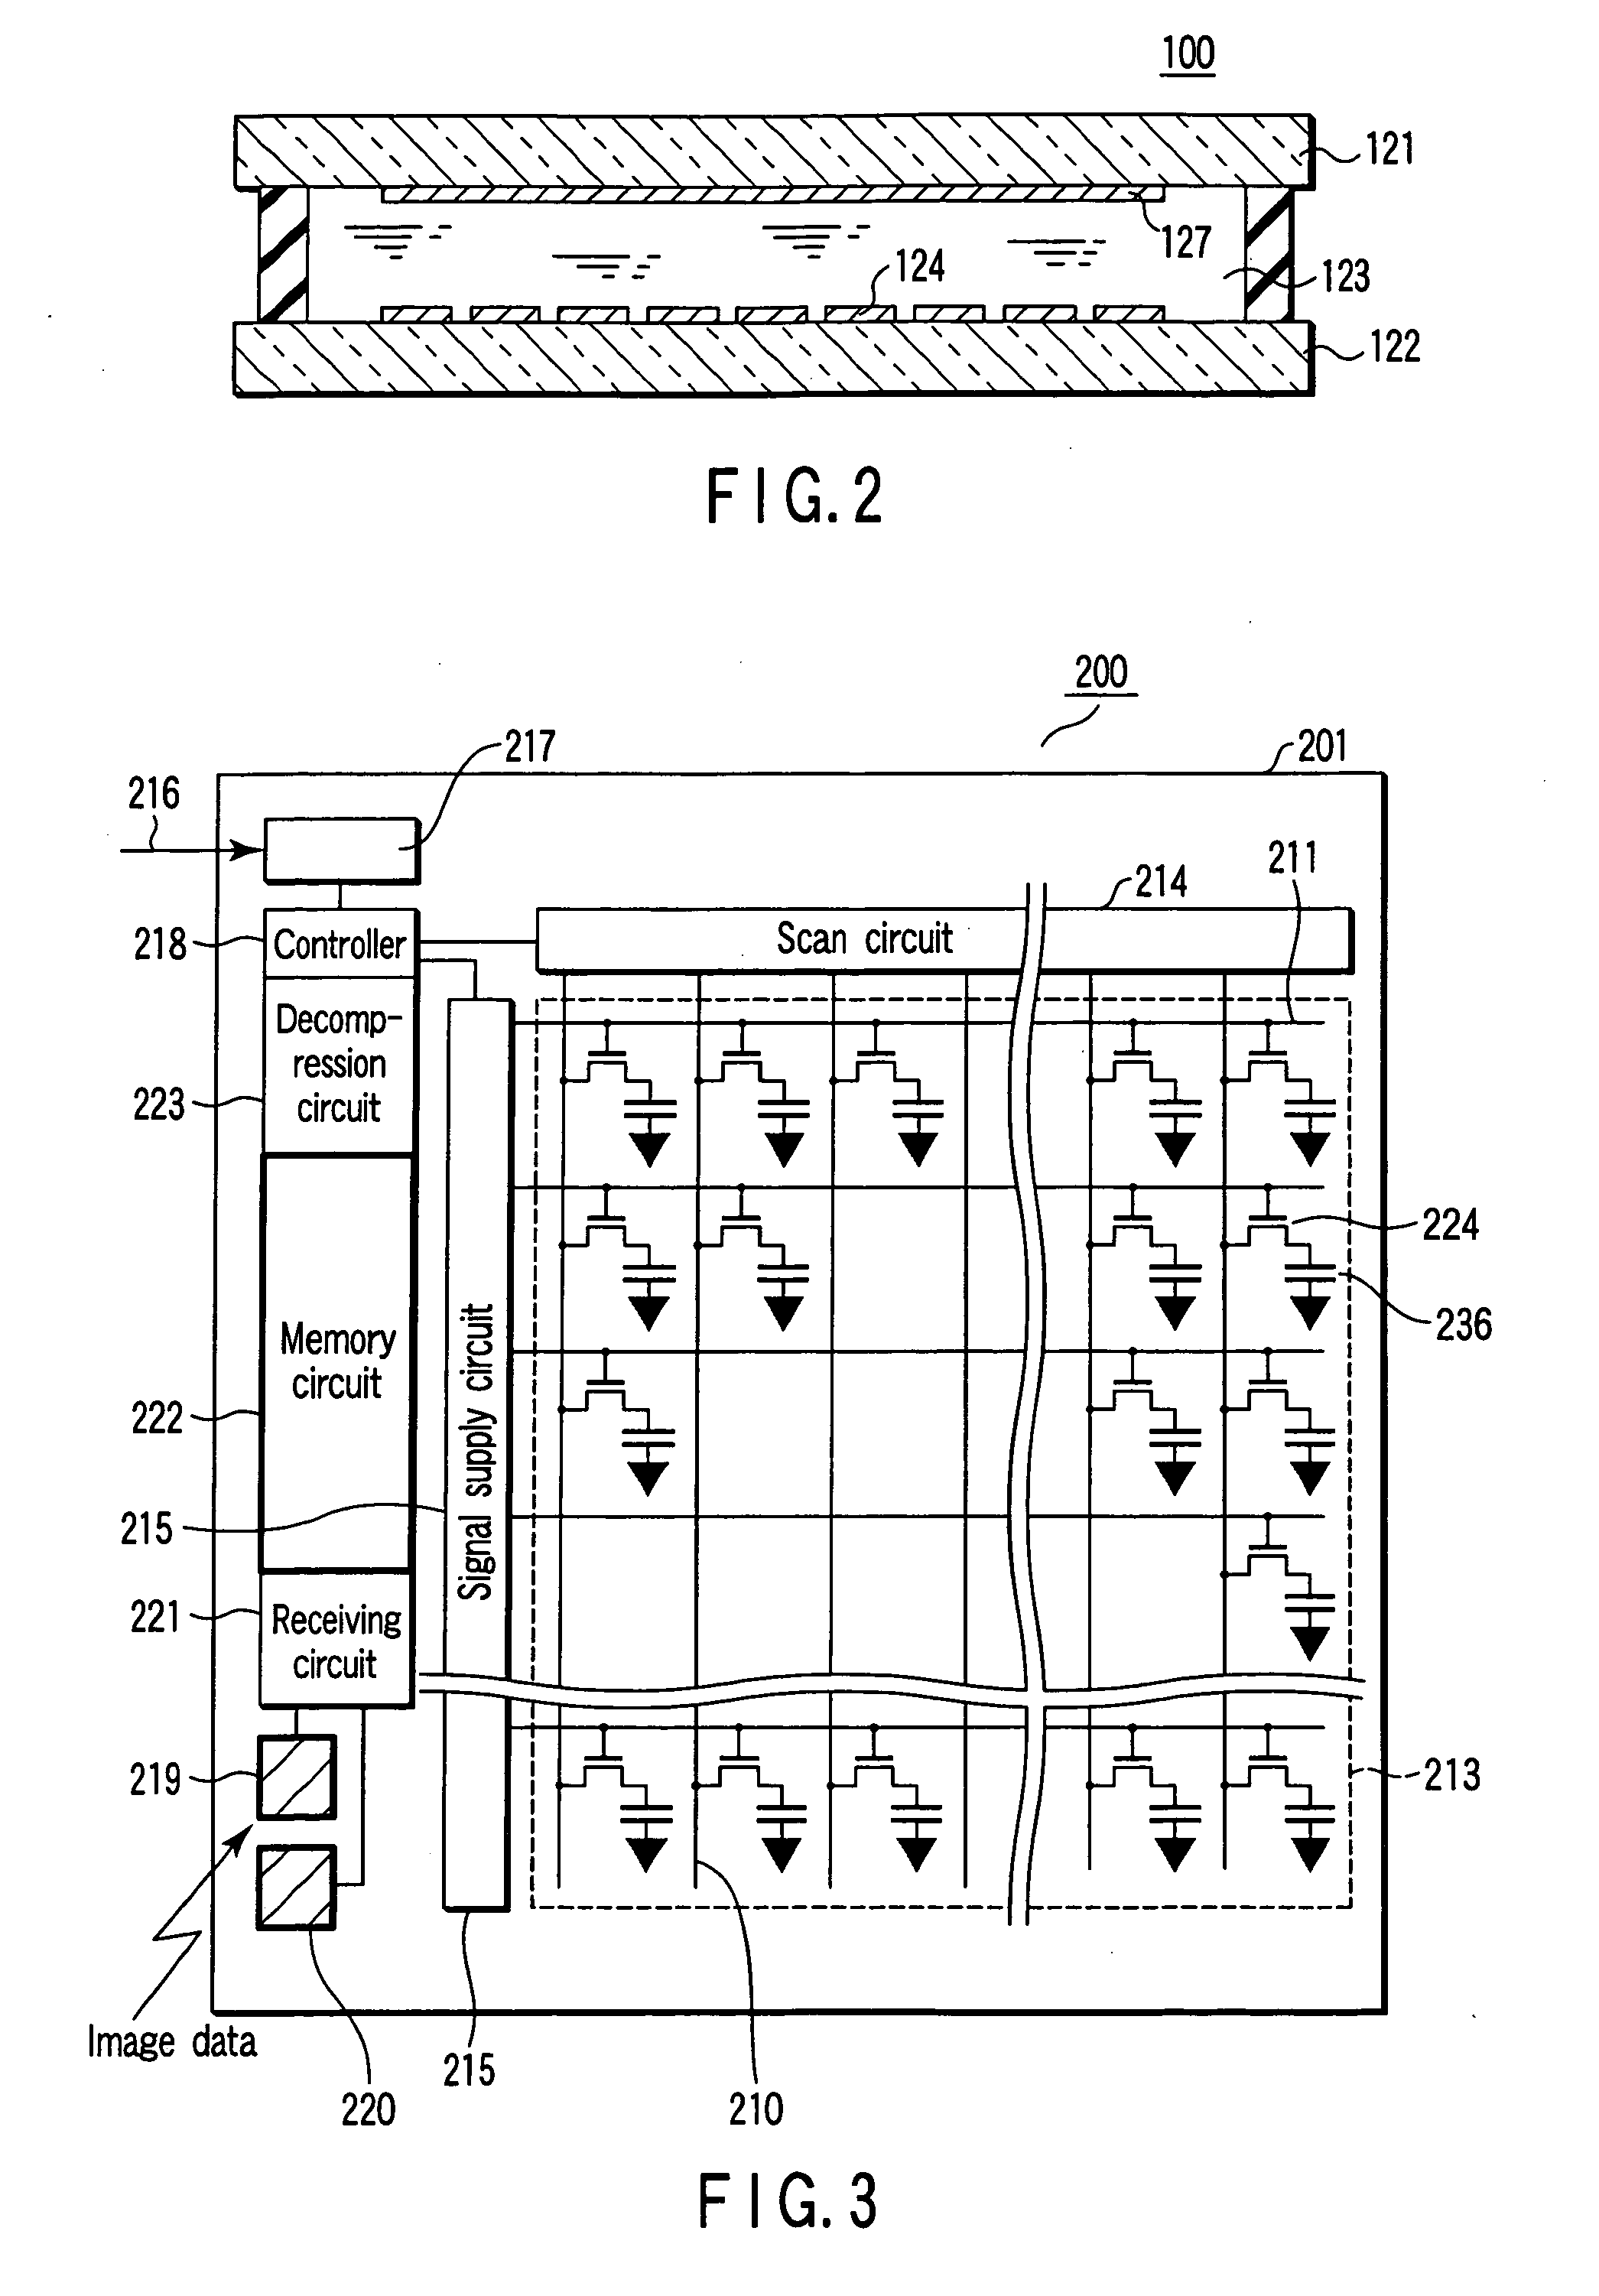 Image display apparatus using thin-film transistors